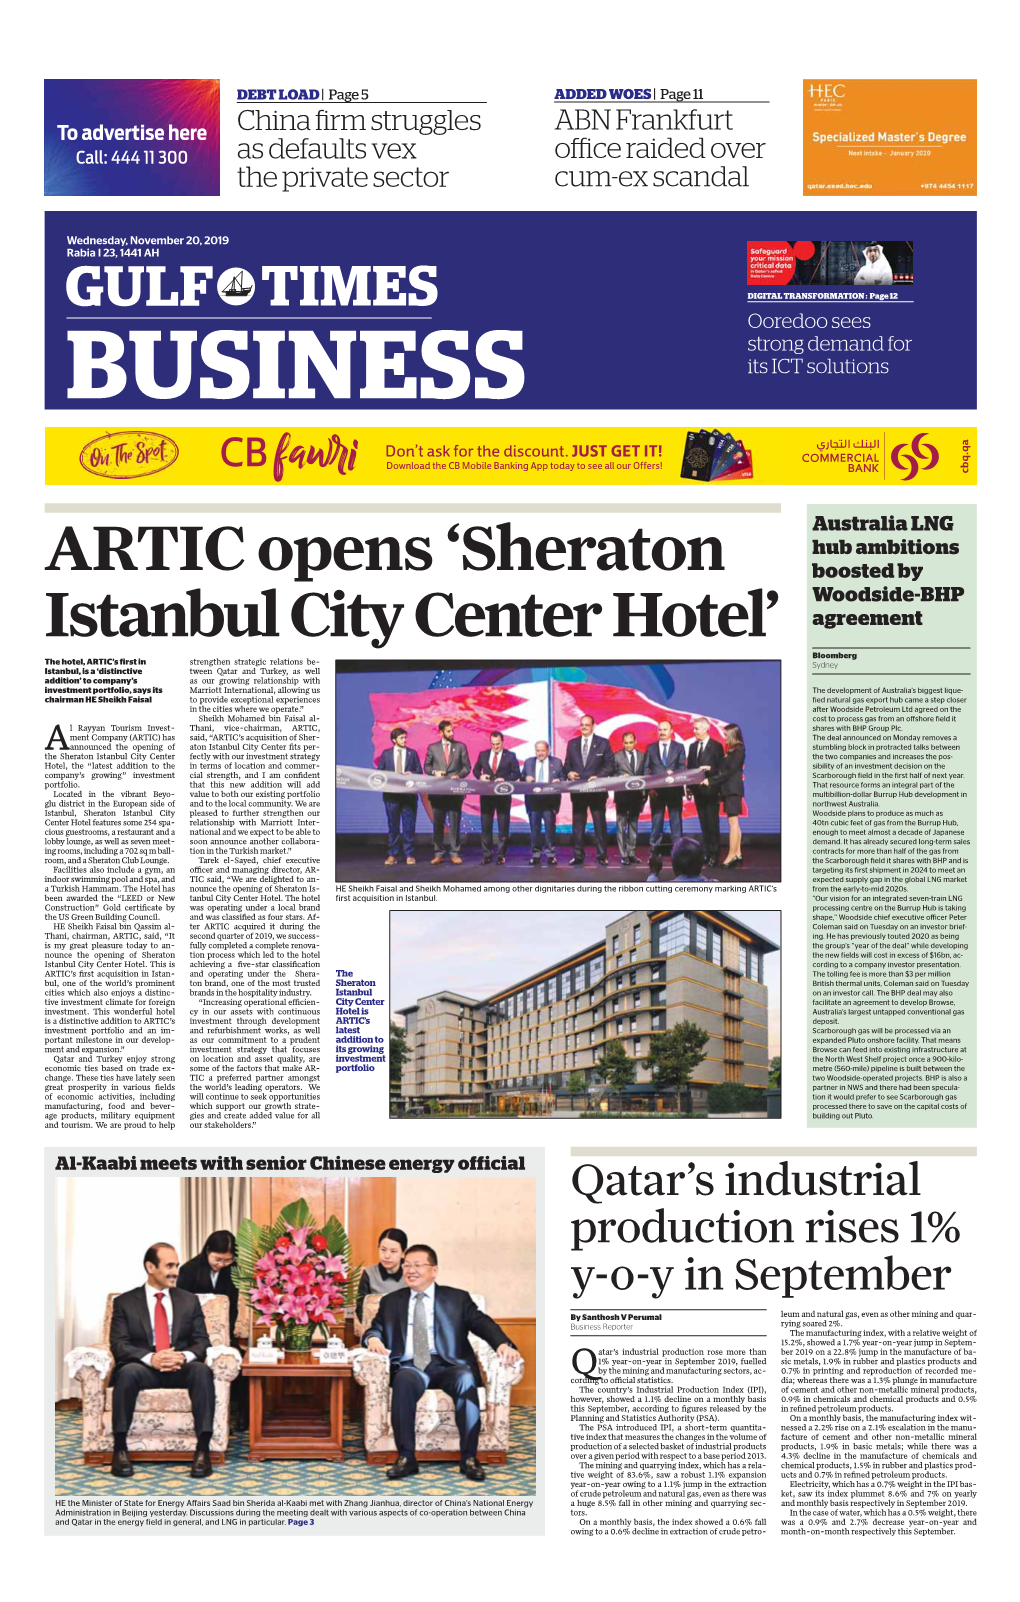 Sheraton Istanbul City Center Hotel